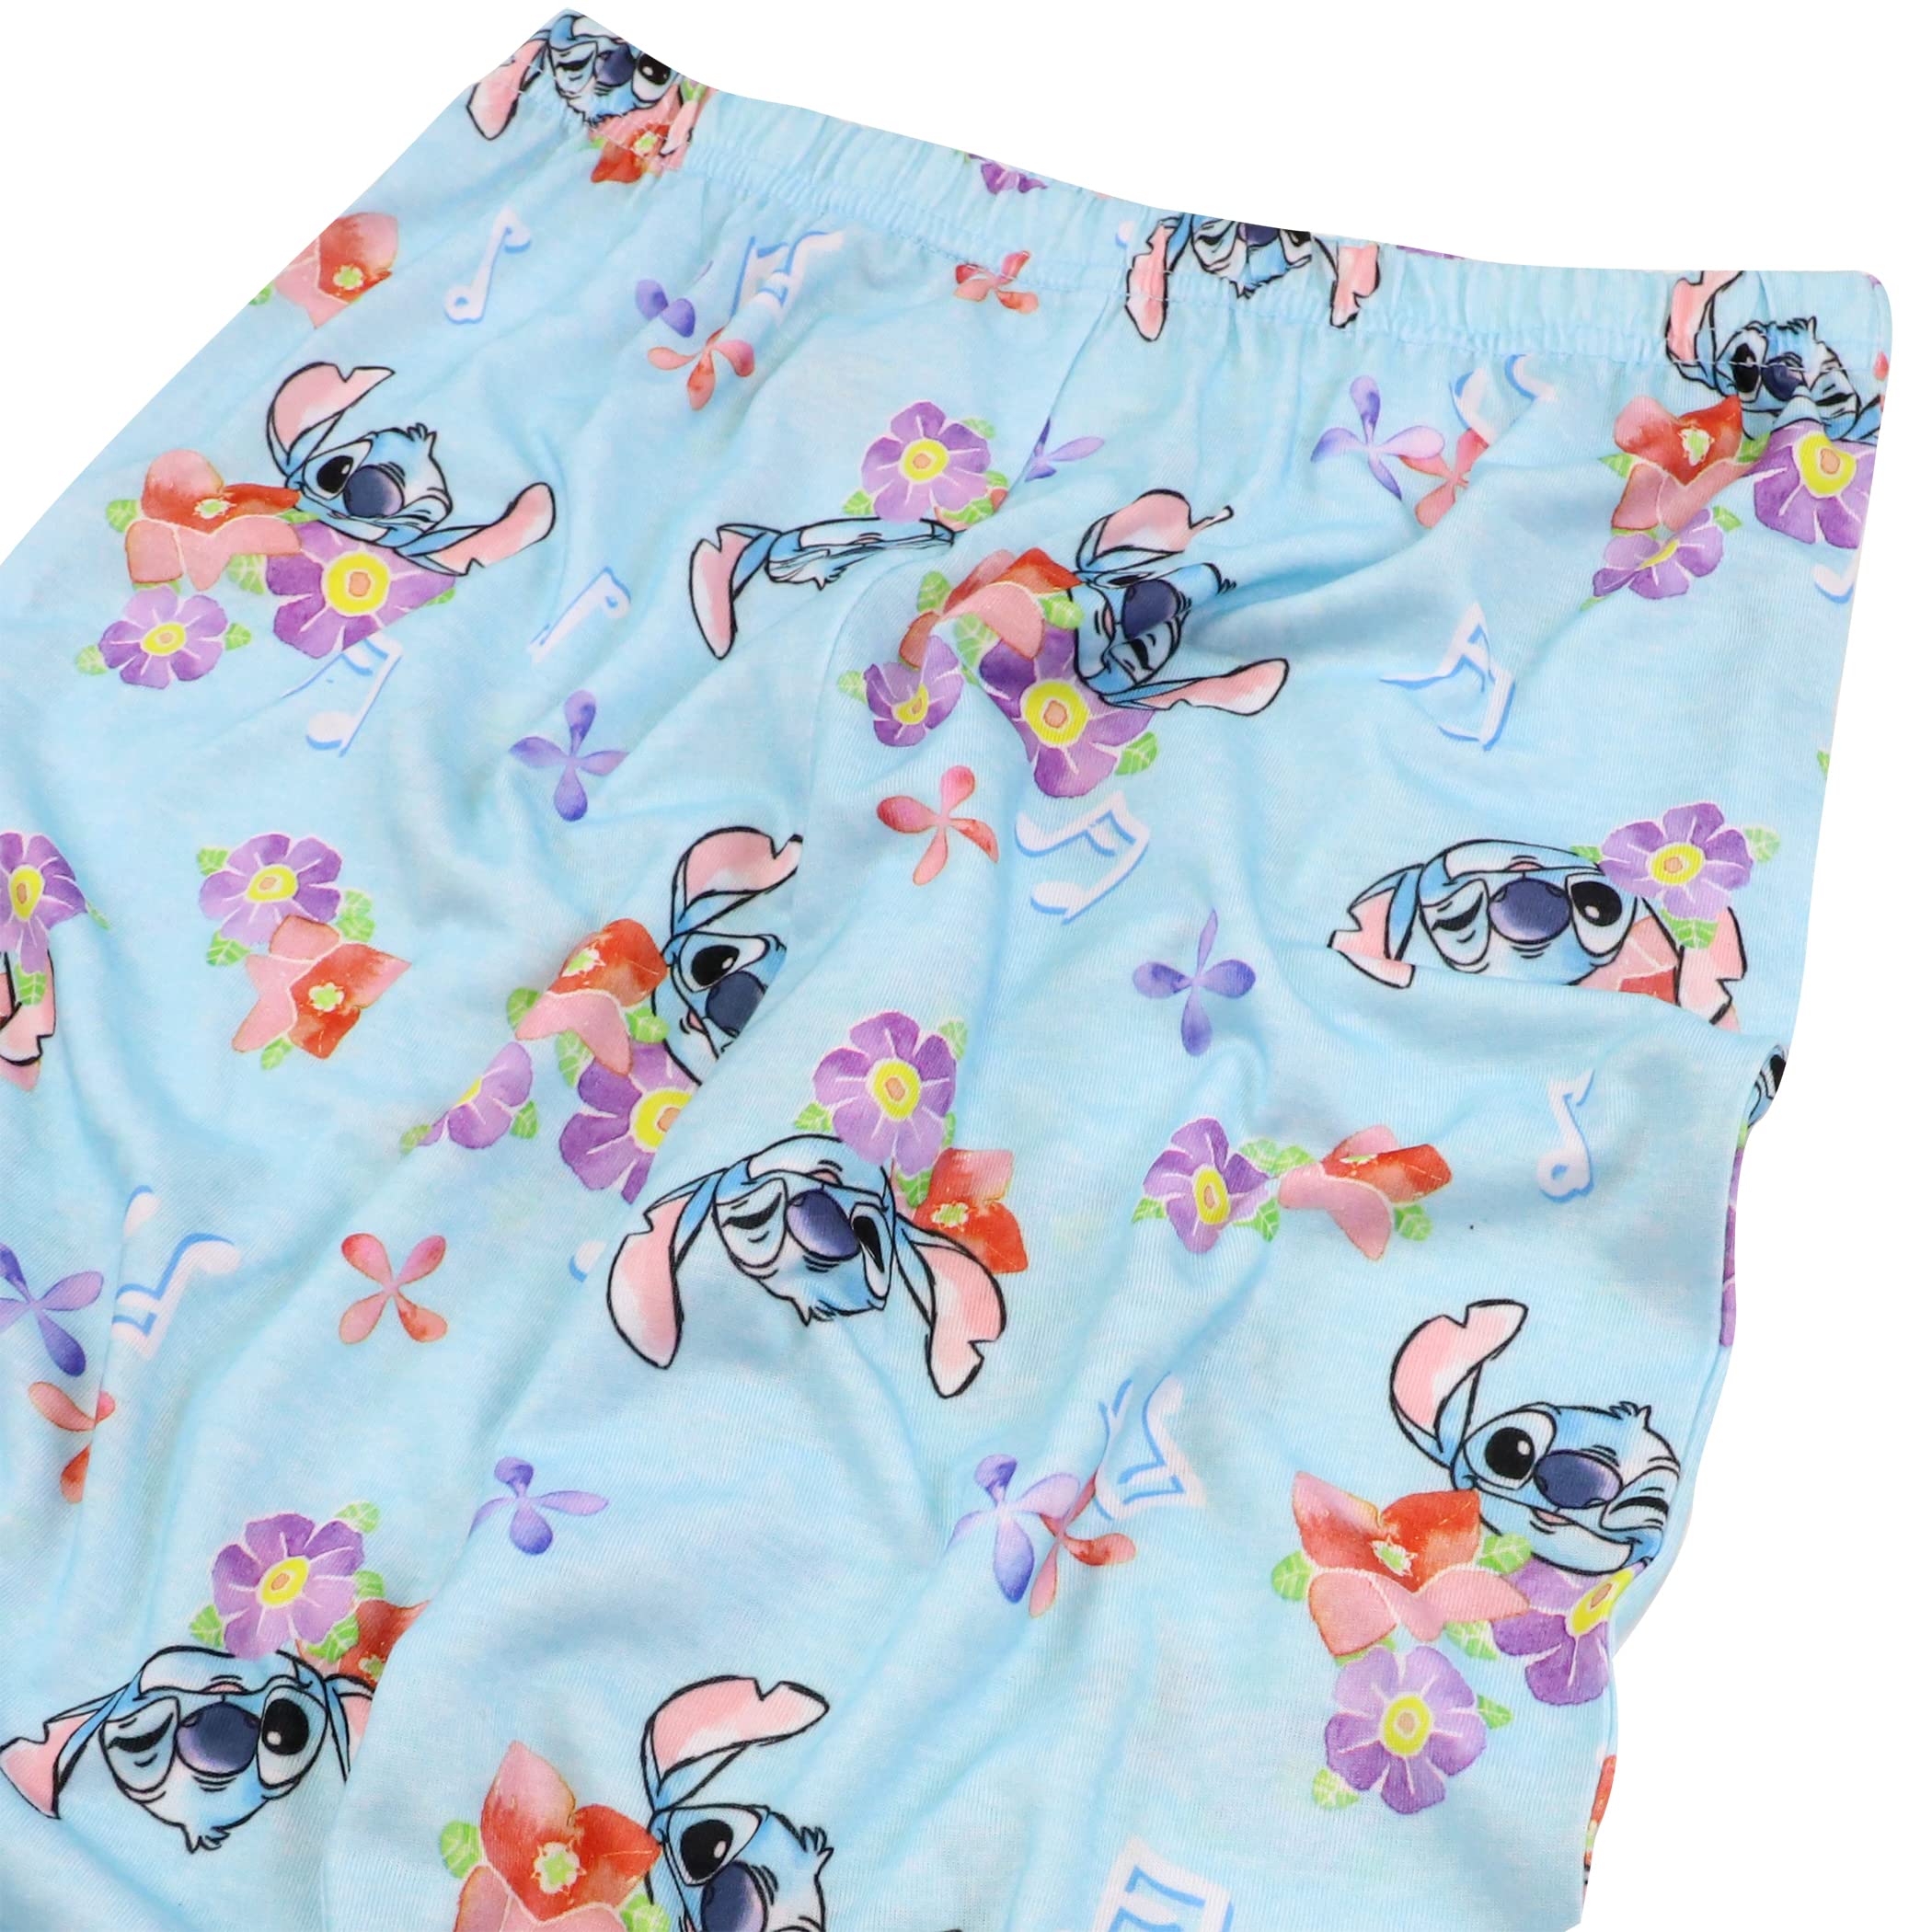 Disney Girls' Lilo & Stitch 2-Piece Loose-Fit Pajamas Set, MY HAPPY PLACE, 6